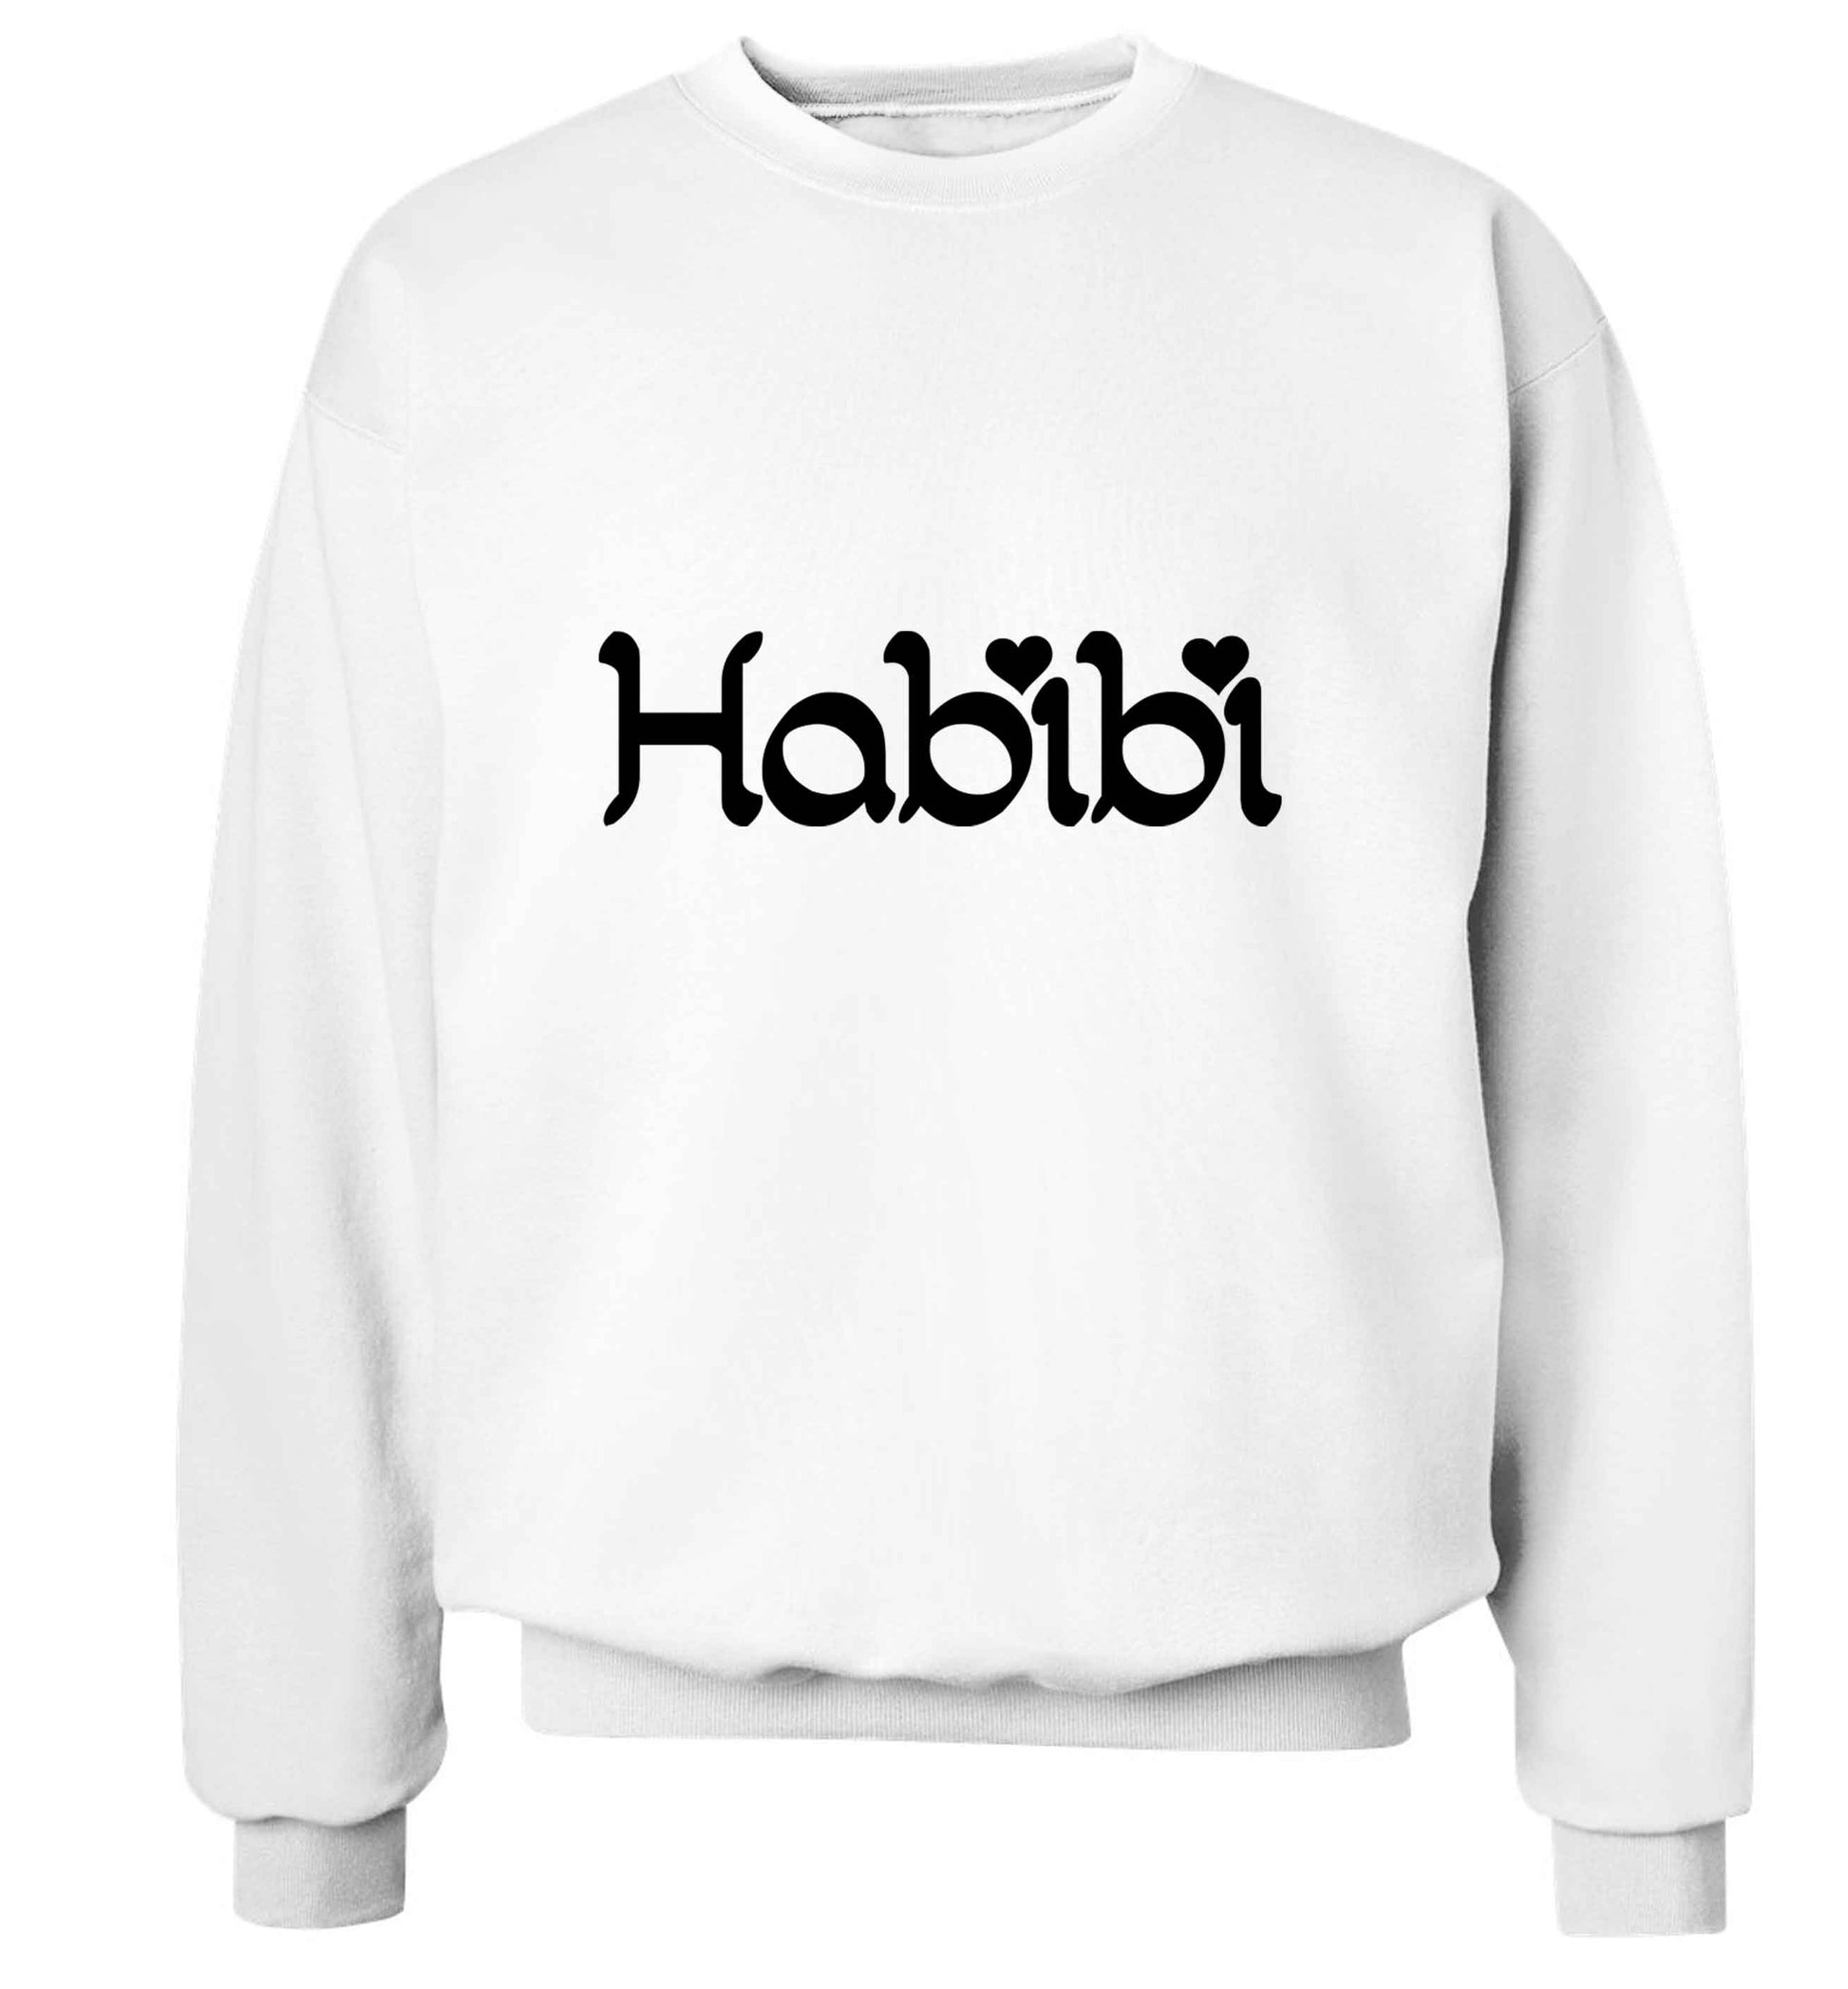 Habibi adult's unisex white sweater 2XL